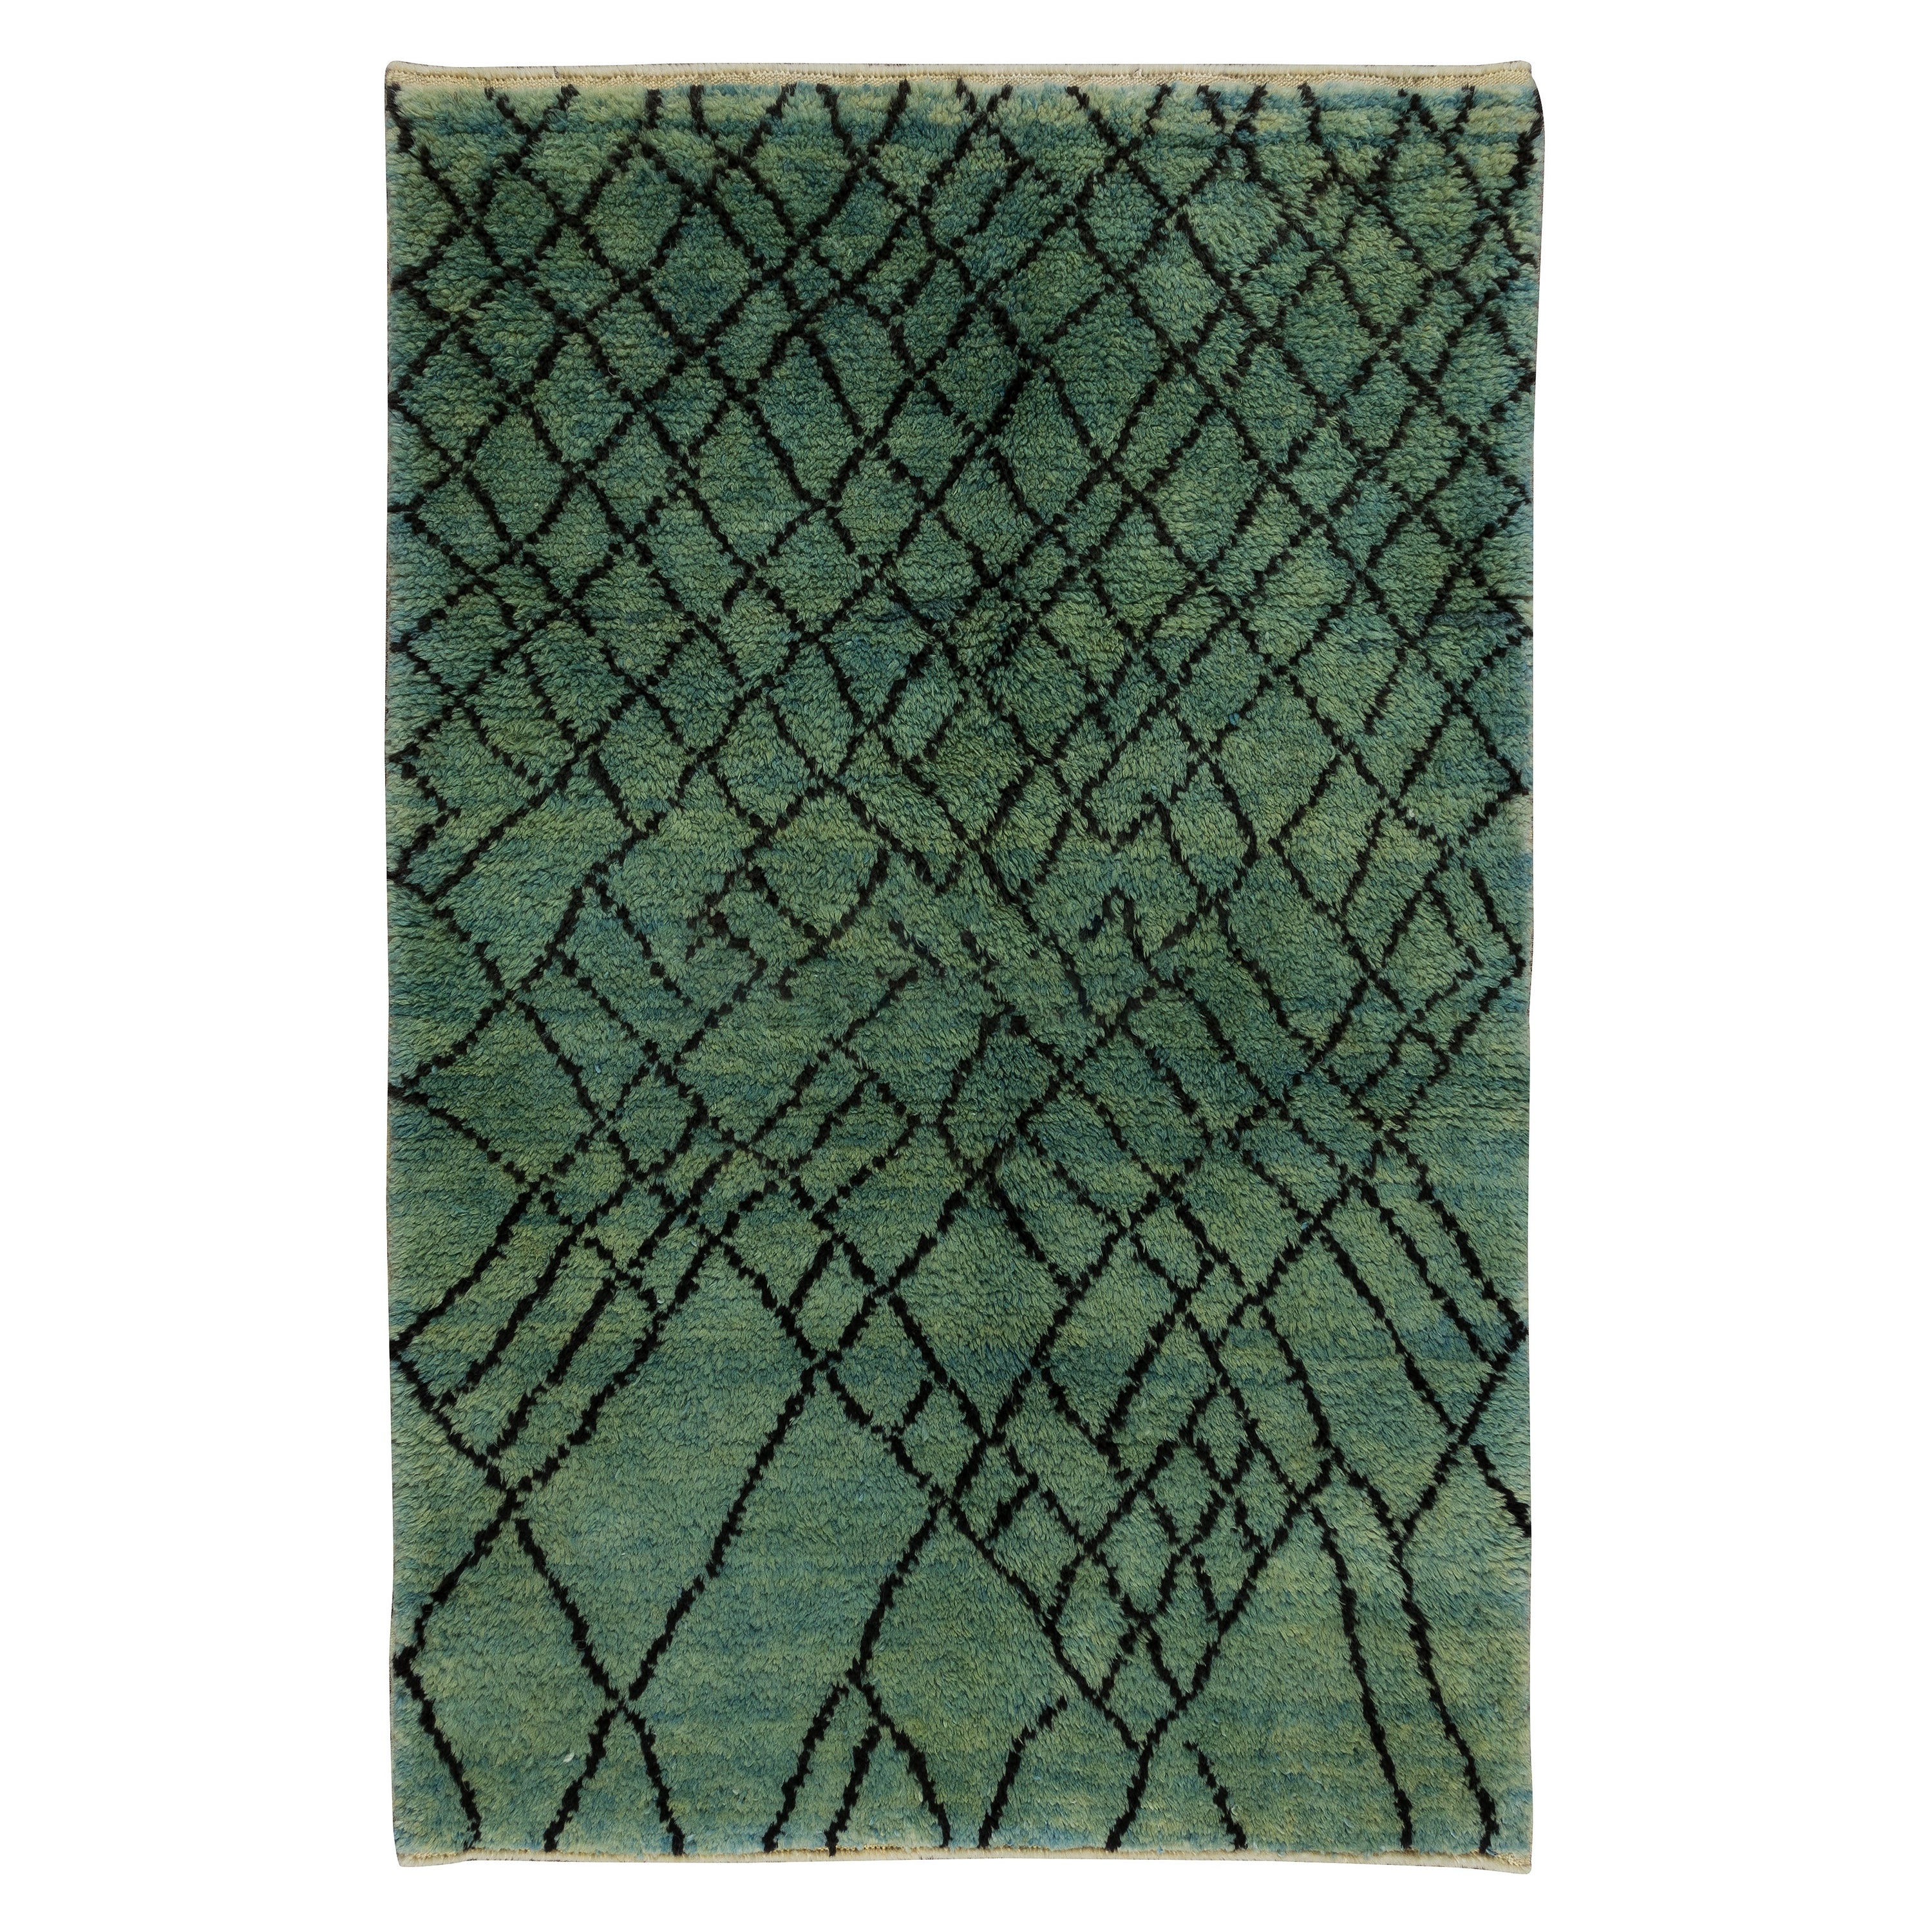 4.2x6 Ft Handmade Moroccan Rug with Diamond Design, Blue Berber Carpet, All Wool